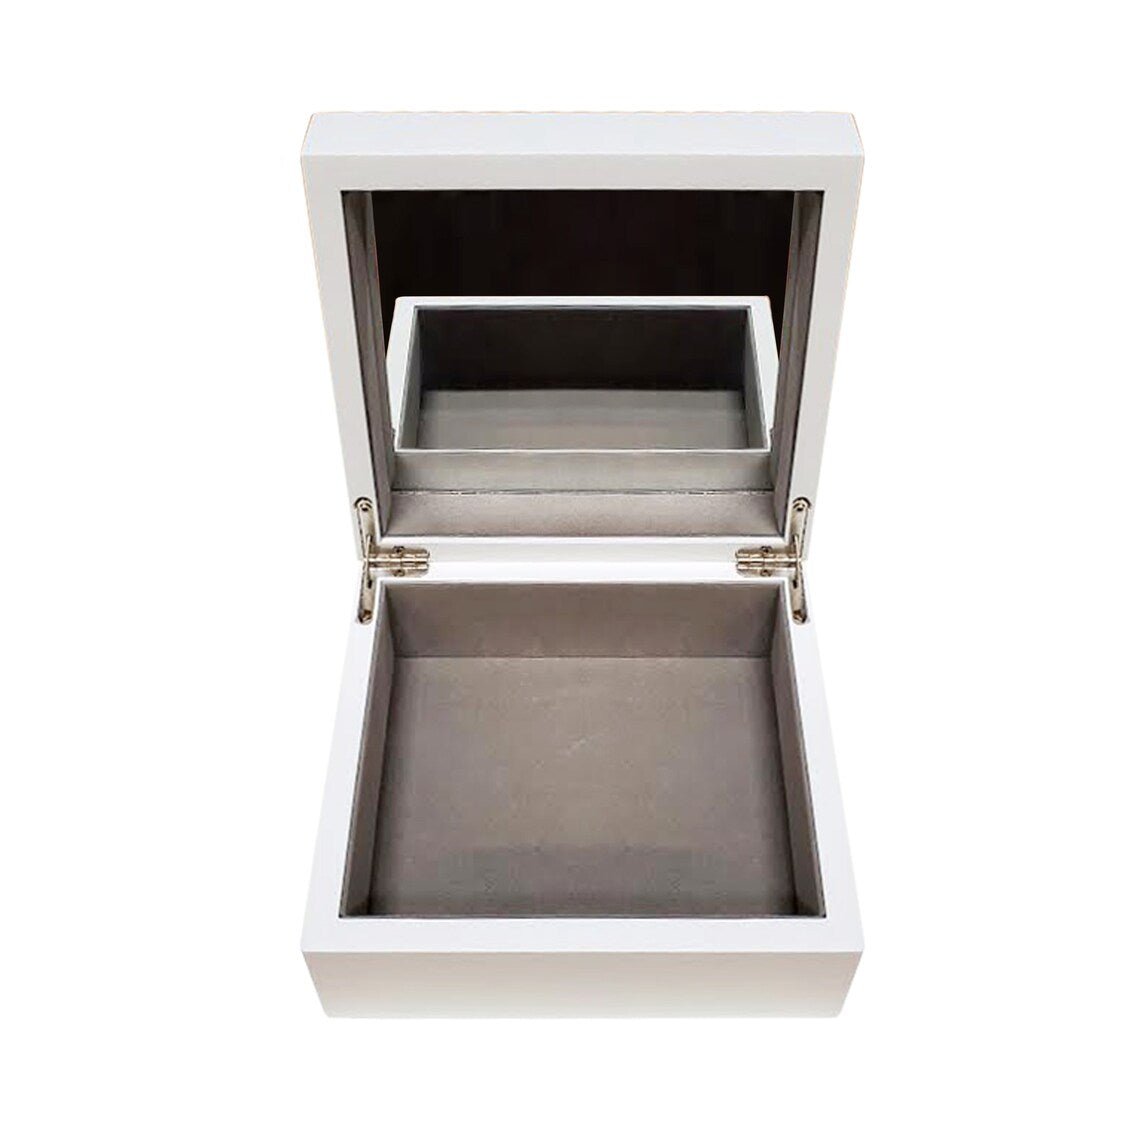 Modern Inspirational White Jewelry Keepsake Box for Children 6x5.5 - For This Child I Have Prayed - LifeSong Milestones